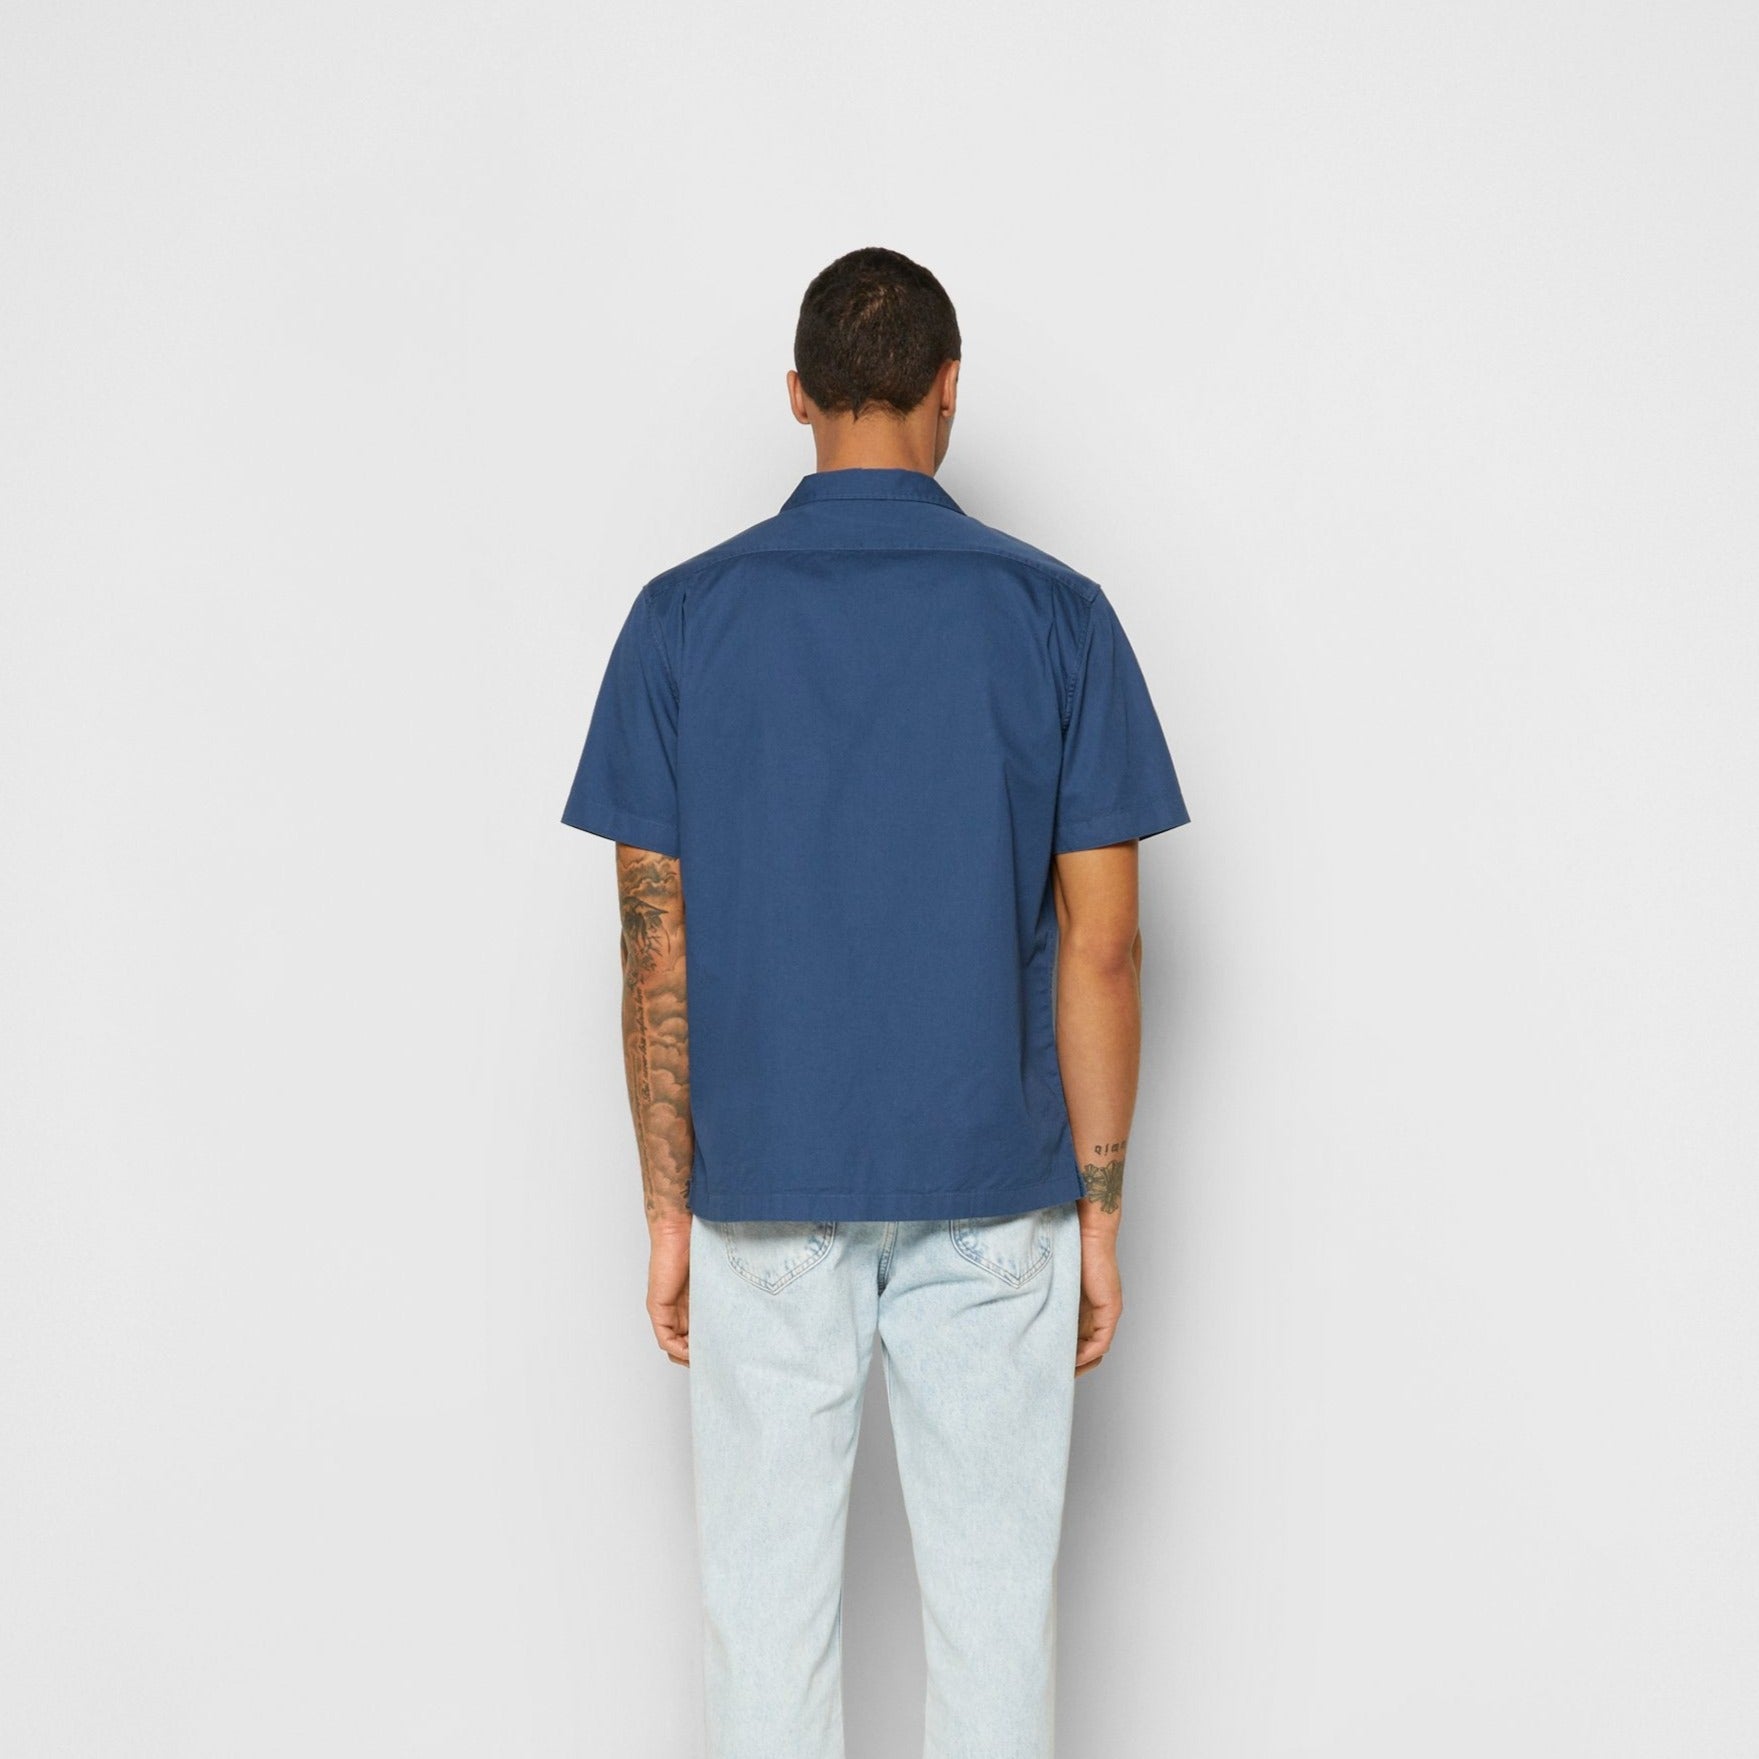 Short Sleeve Work Shirt - Twilight Blue